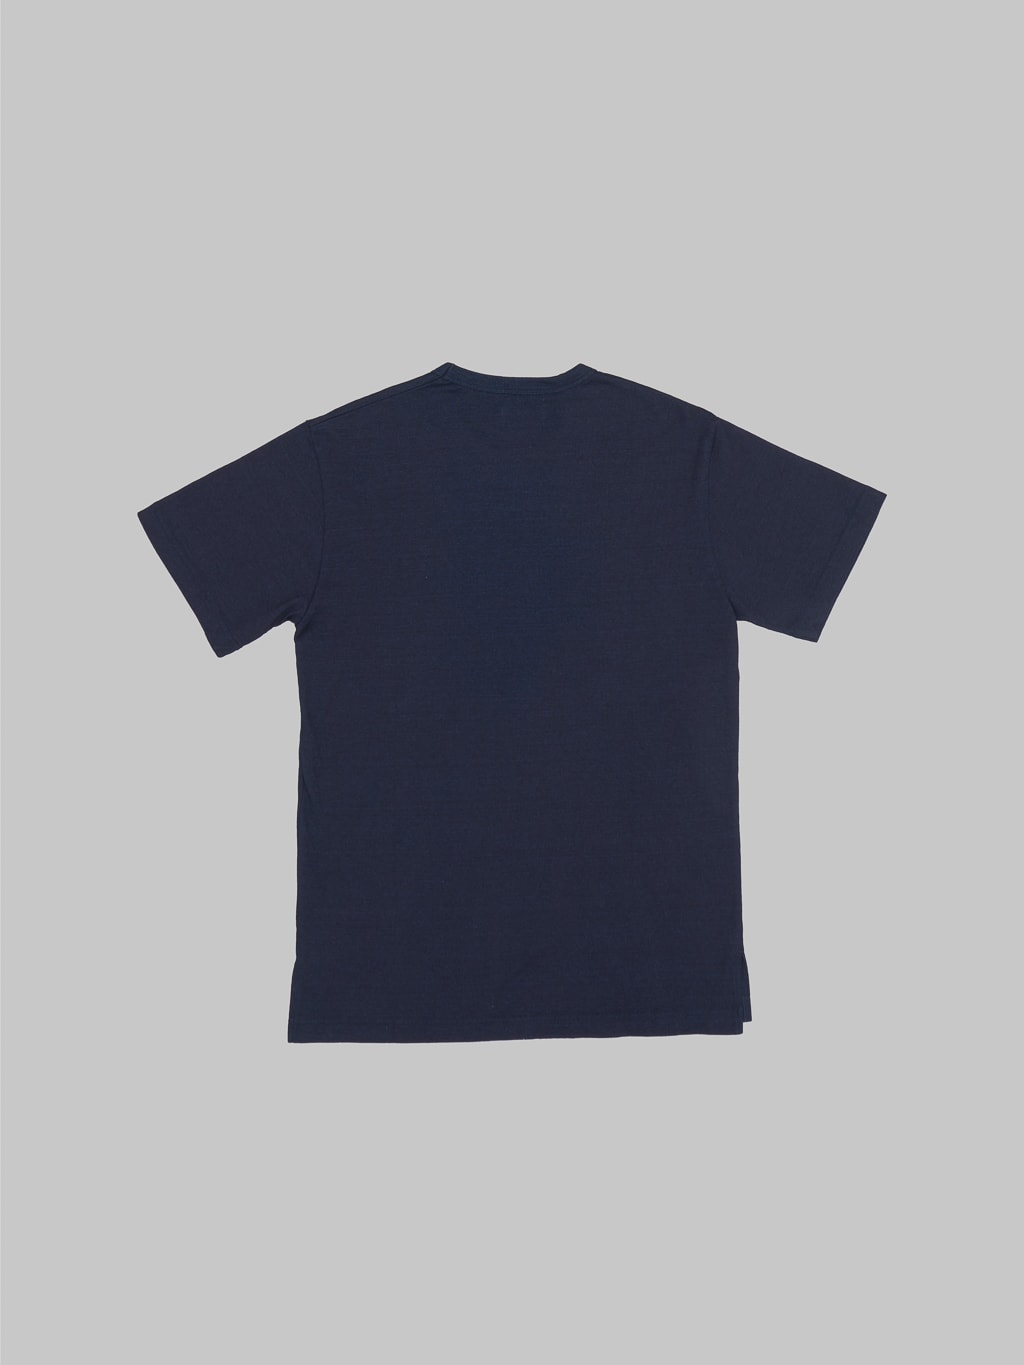 Momotaro MXTS1006 Yarn-Dyed Indigo T-shirt